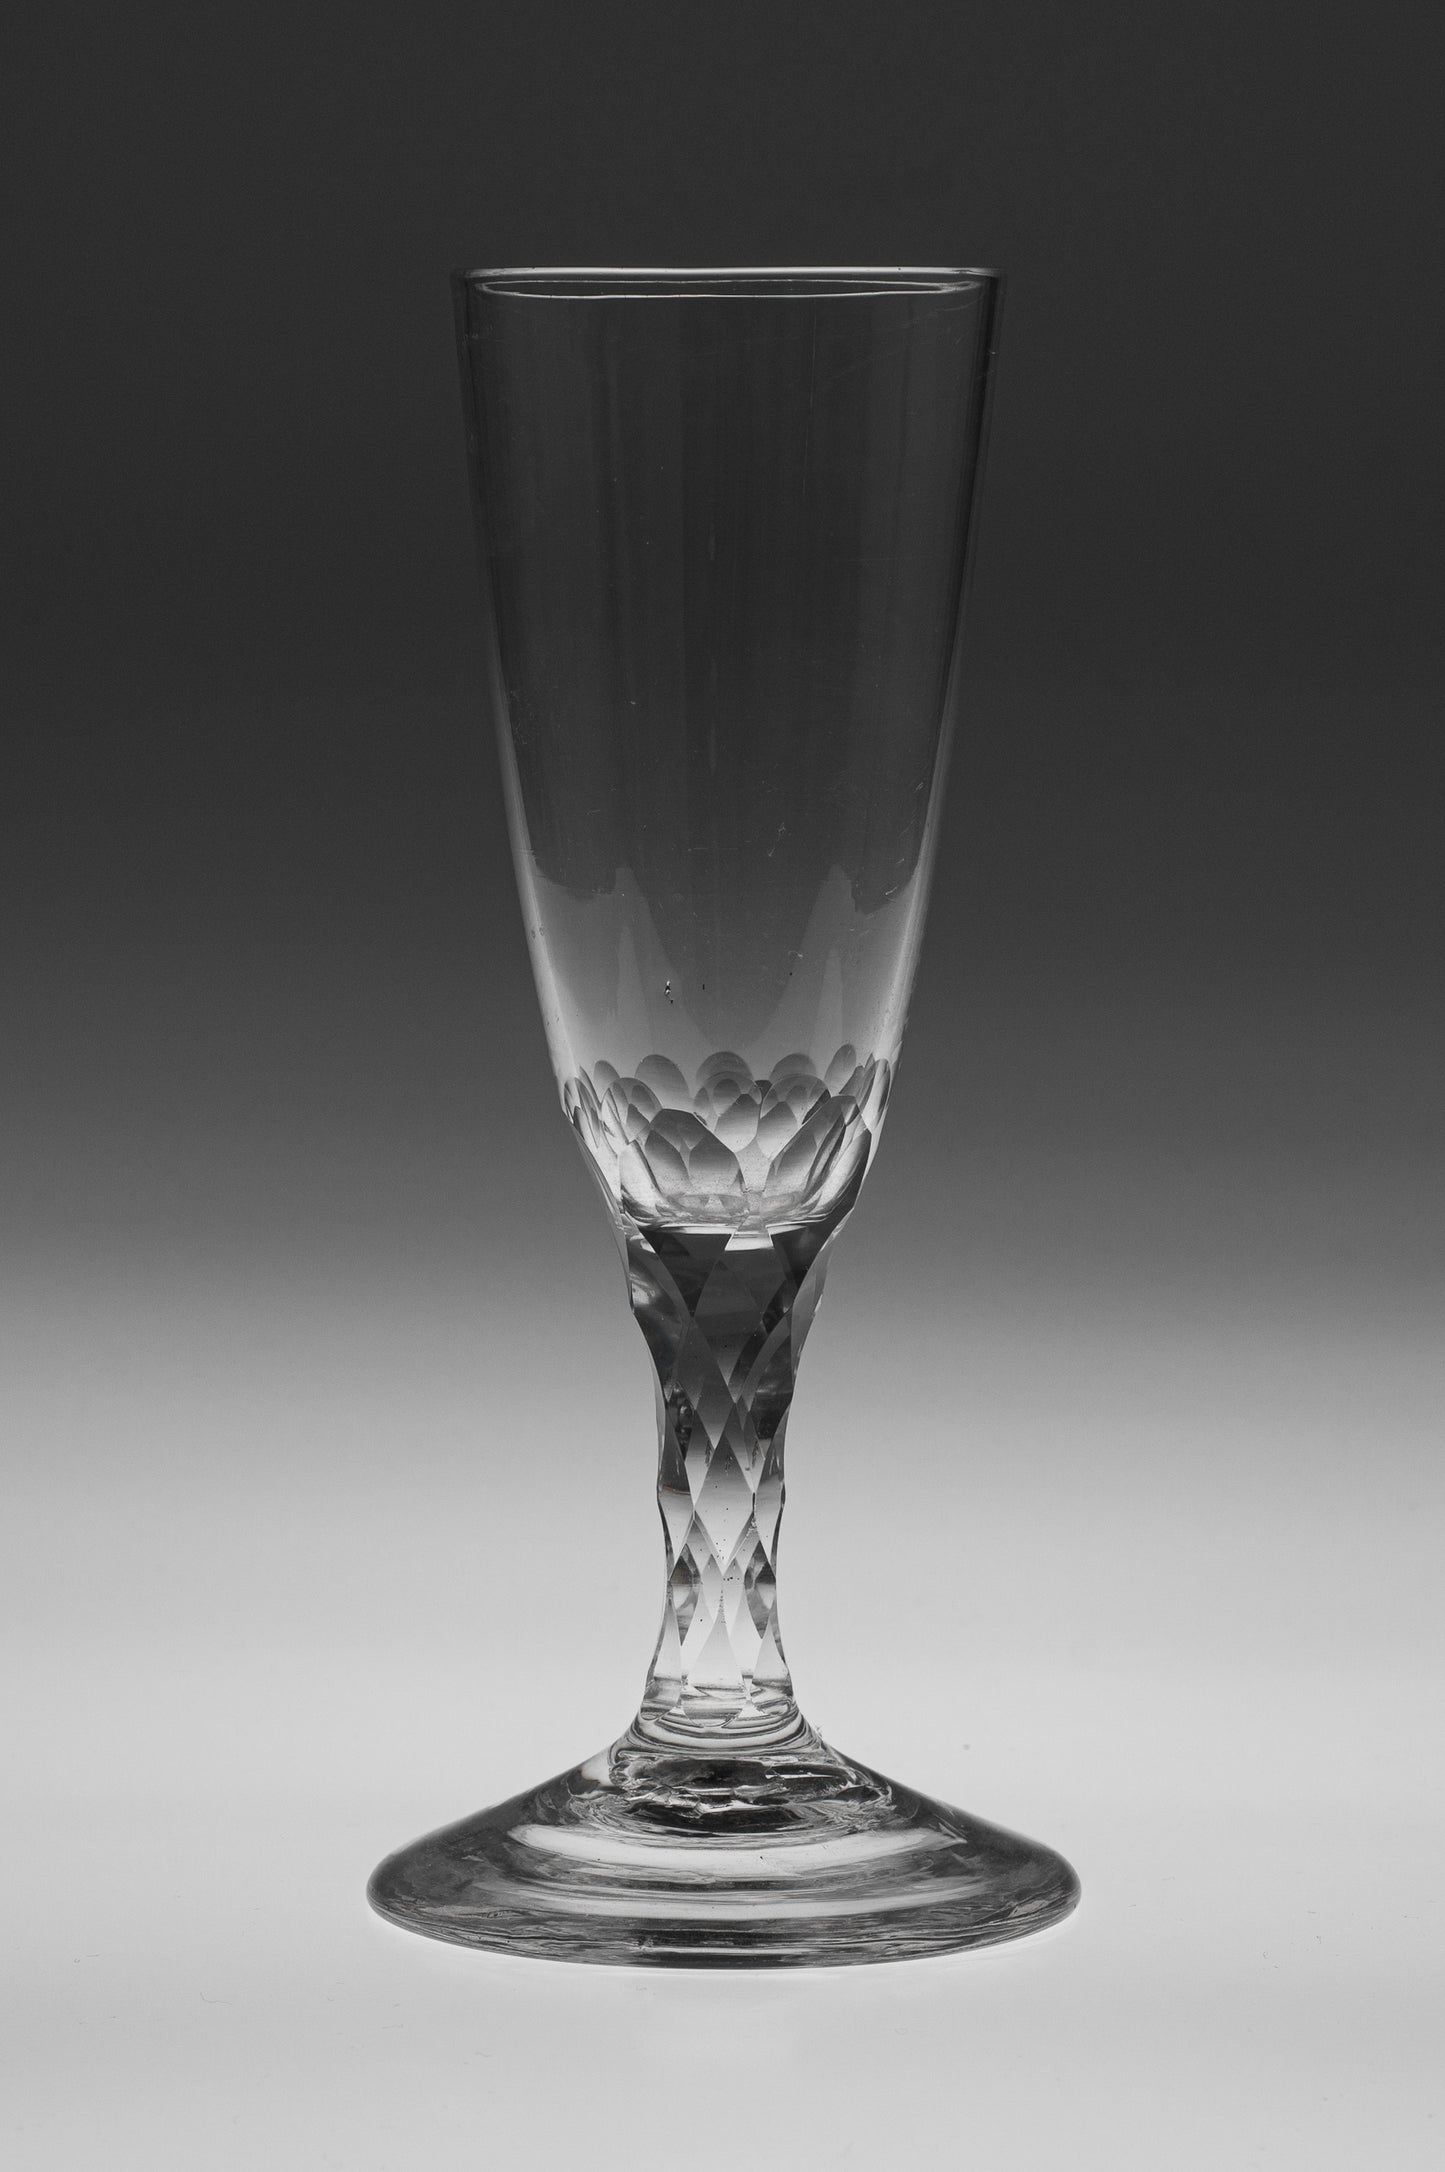 Georgian Antique English Lead Ale Glass with Facet Cut Stem c1780 (Code 9987)